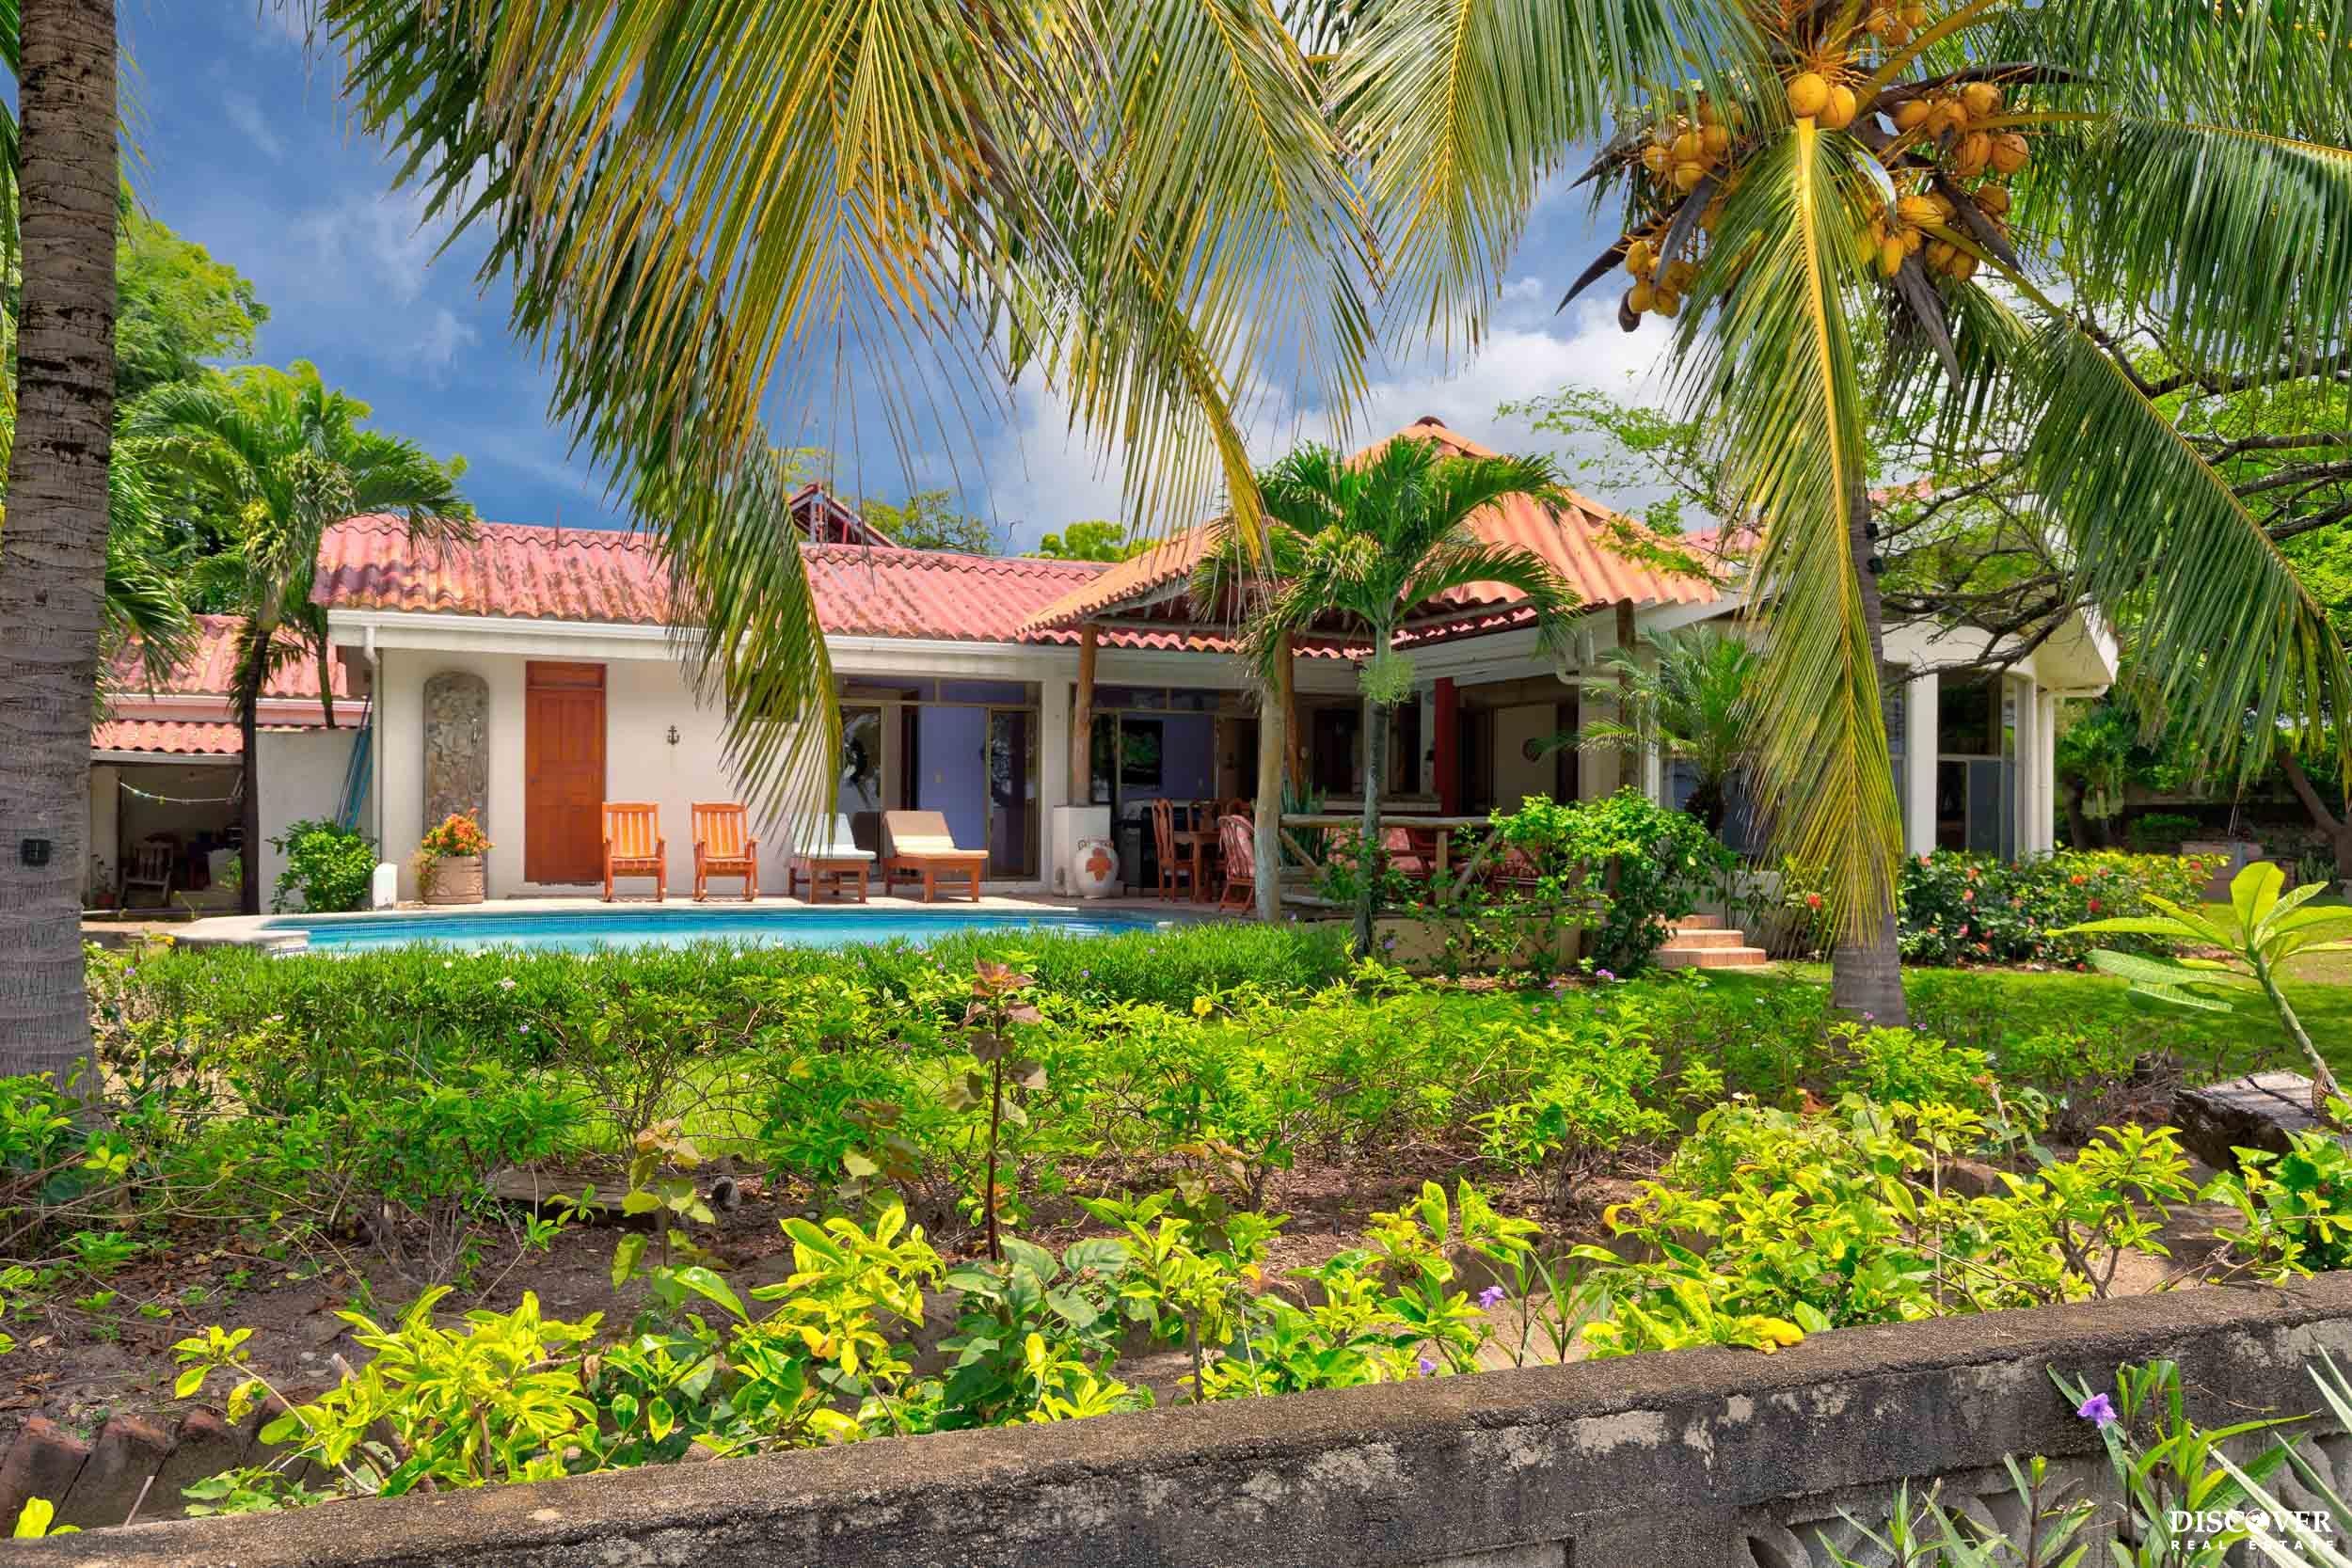 Real Estate for Sale San Juan Del sur Nicaragua November 202119.jpg